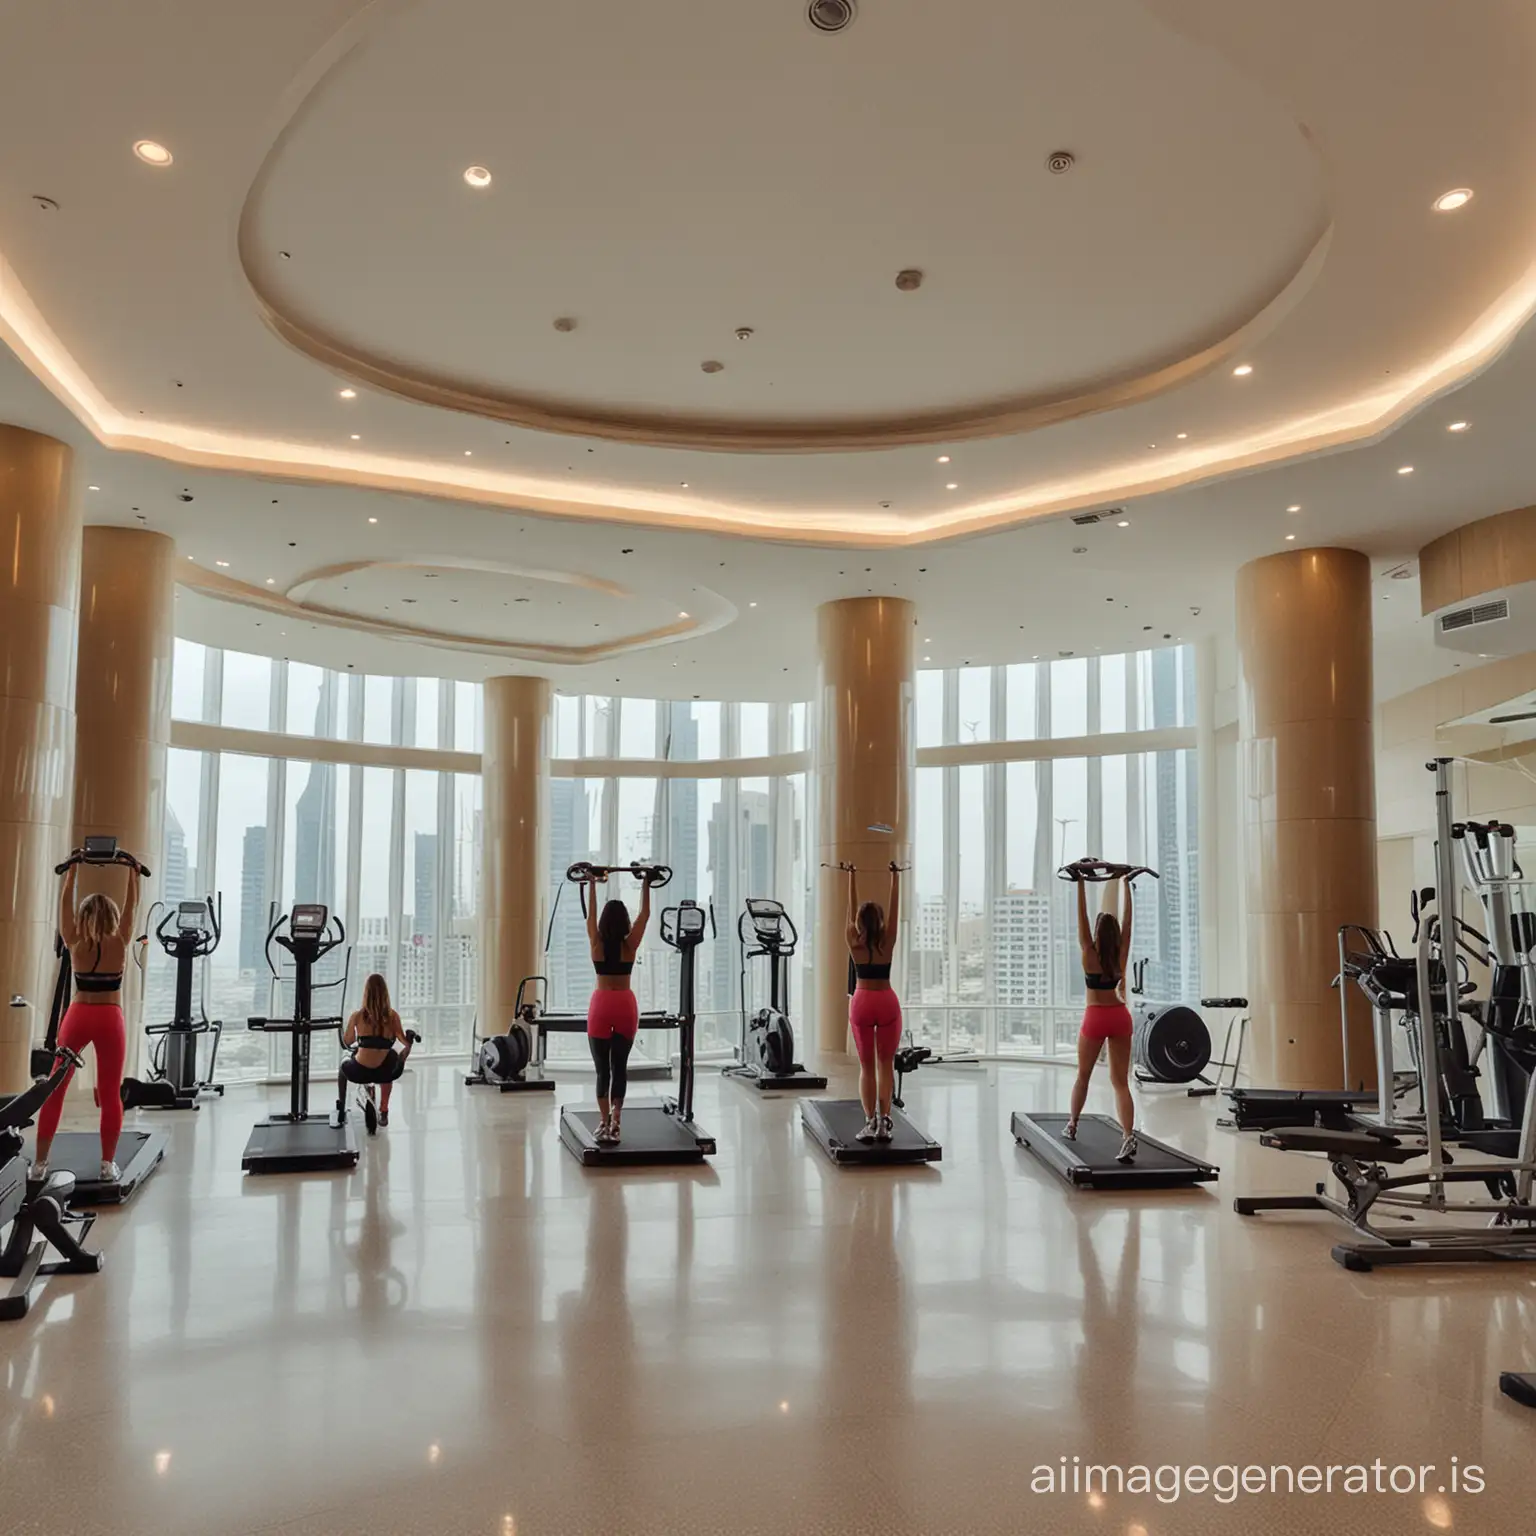 Luxury-Gym-Workout-for-Women-in-Bahrain-Skyscraper-Hotel